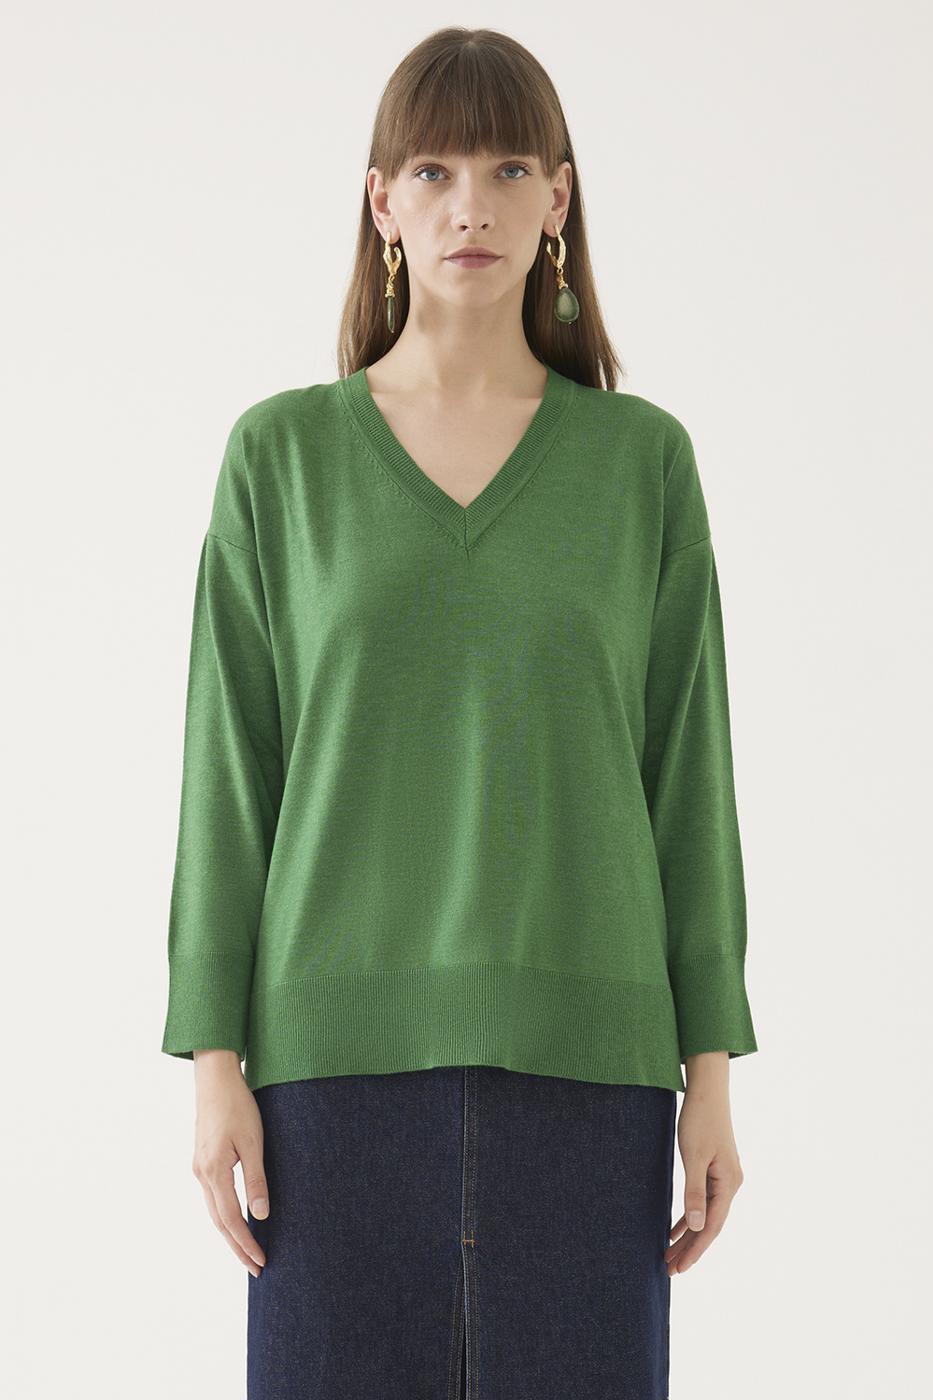 İllas Regular Fit Standart Boy Zümrüt Yeşili Renk Kadın Triko Bluz